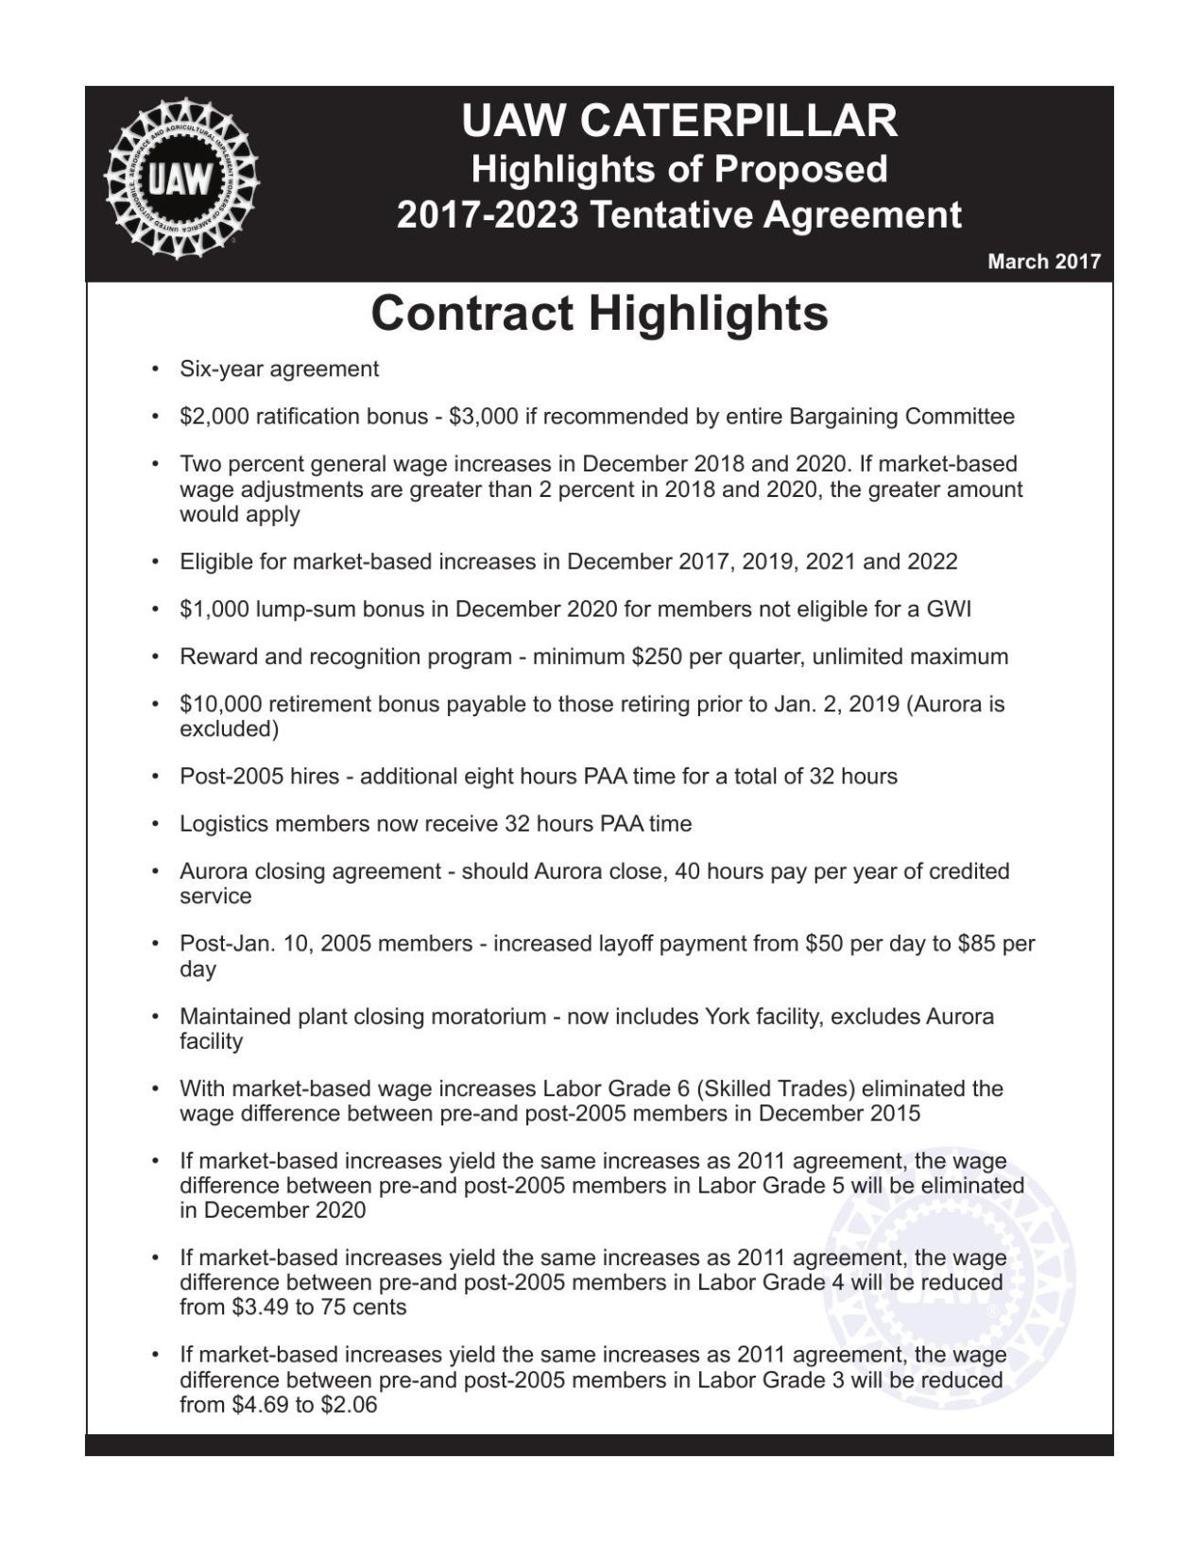 UAW Caterpillar Tentative Agreement Highlights